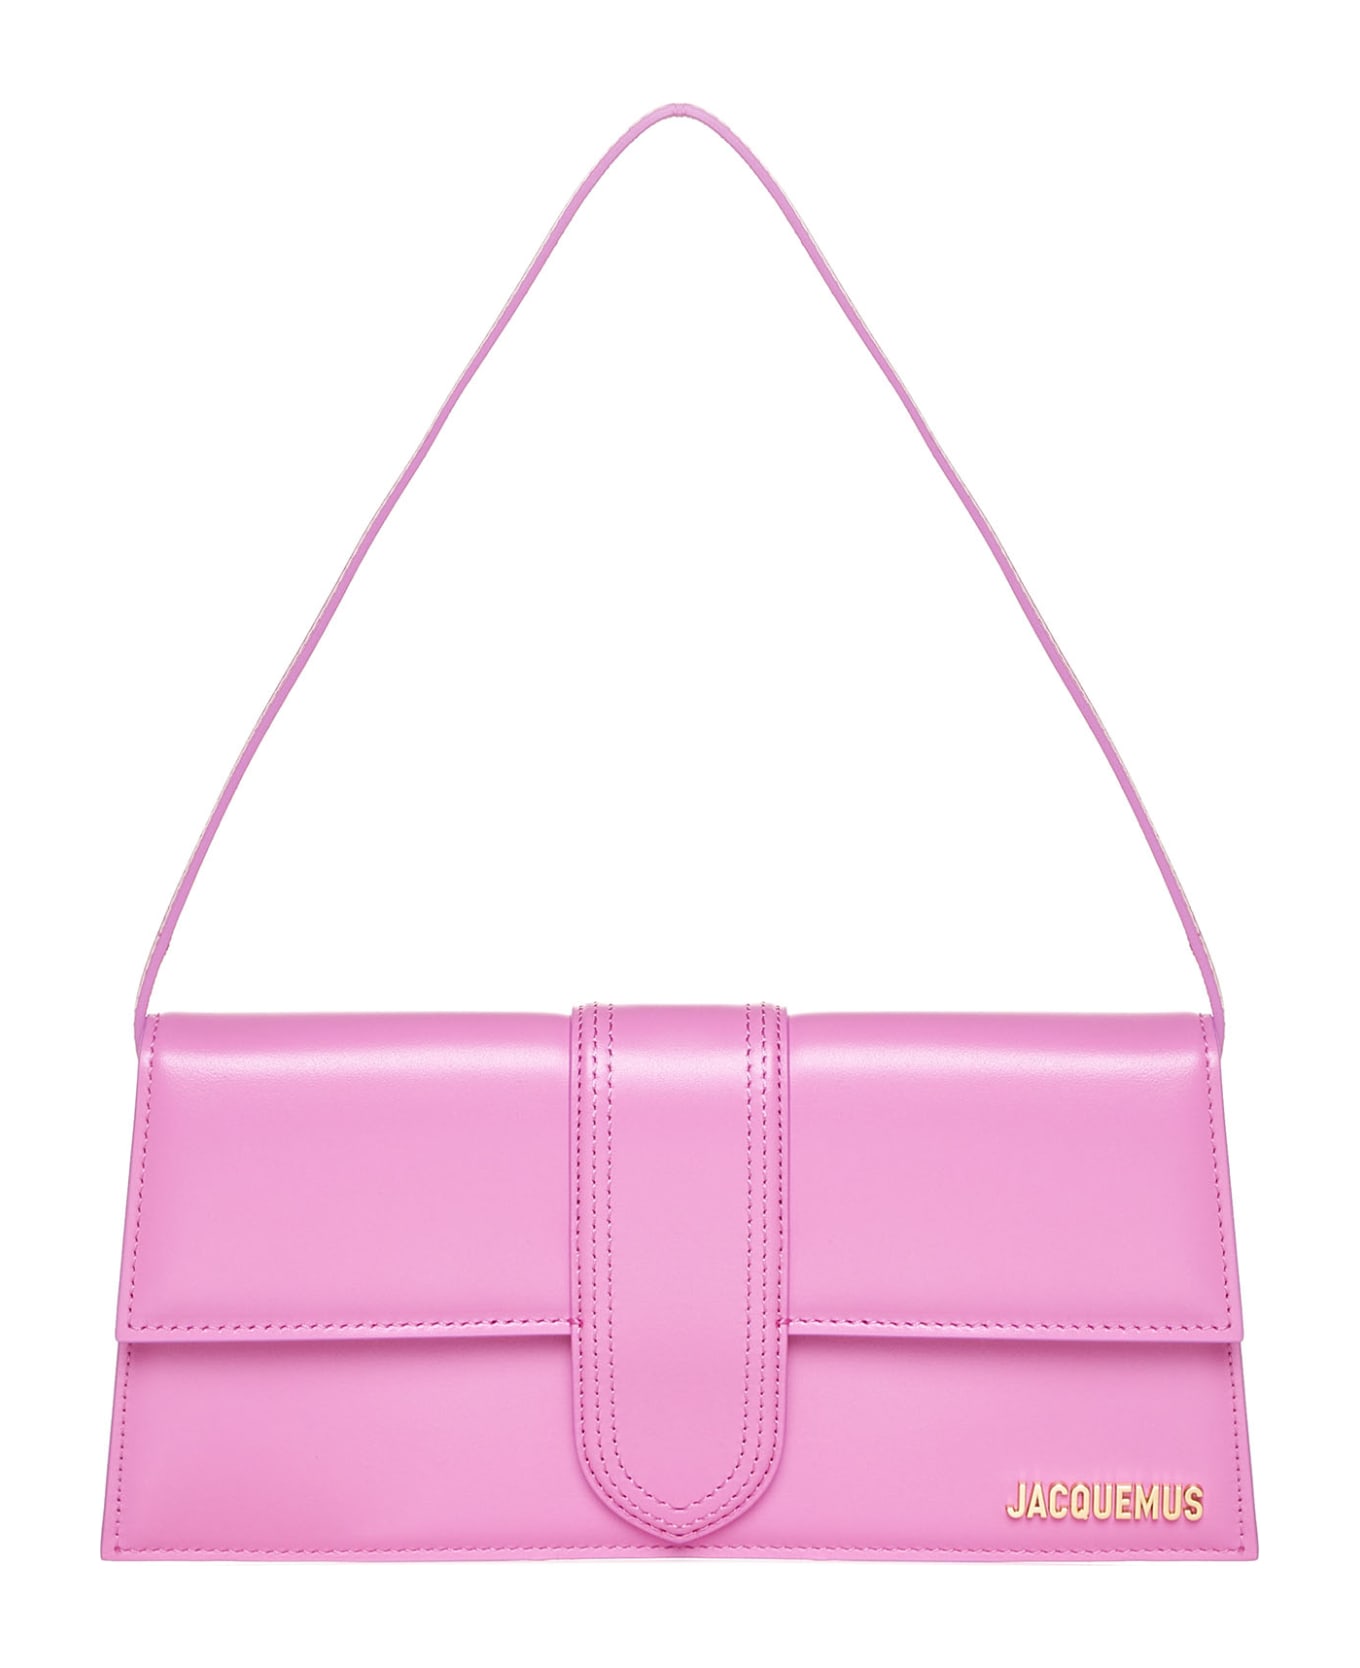 Jacquemus Shoulder Bag - Neon pink